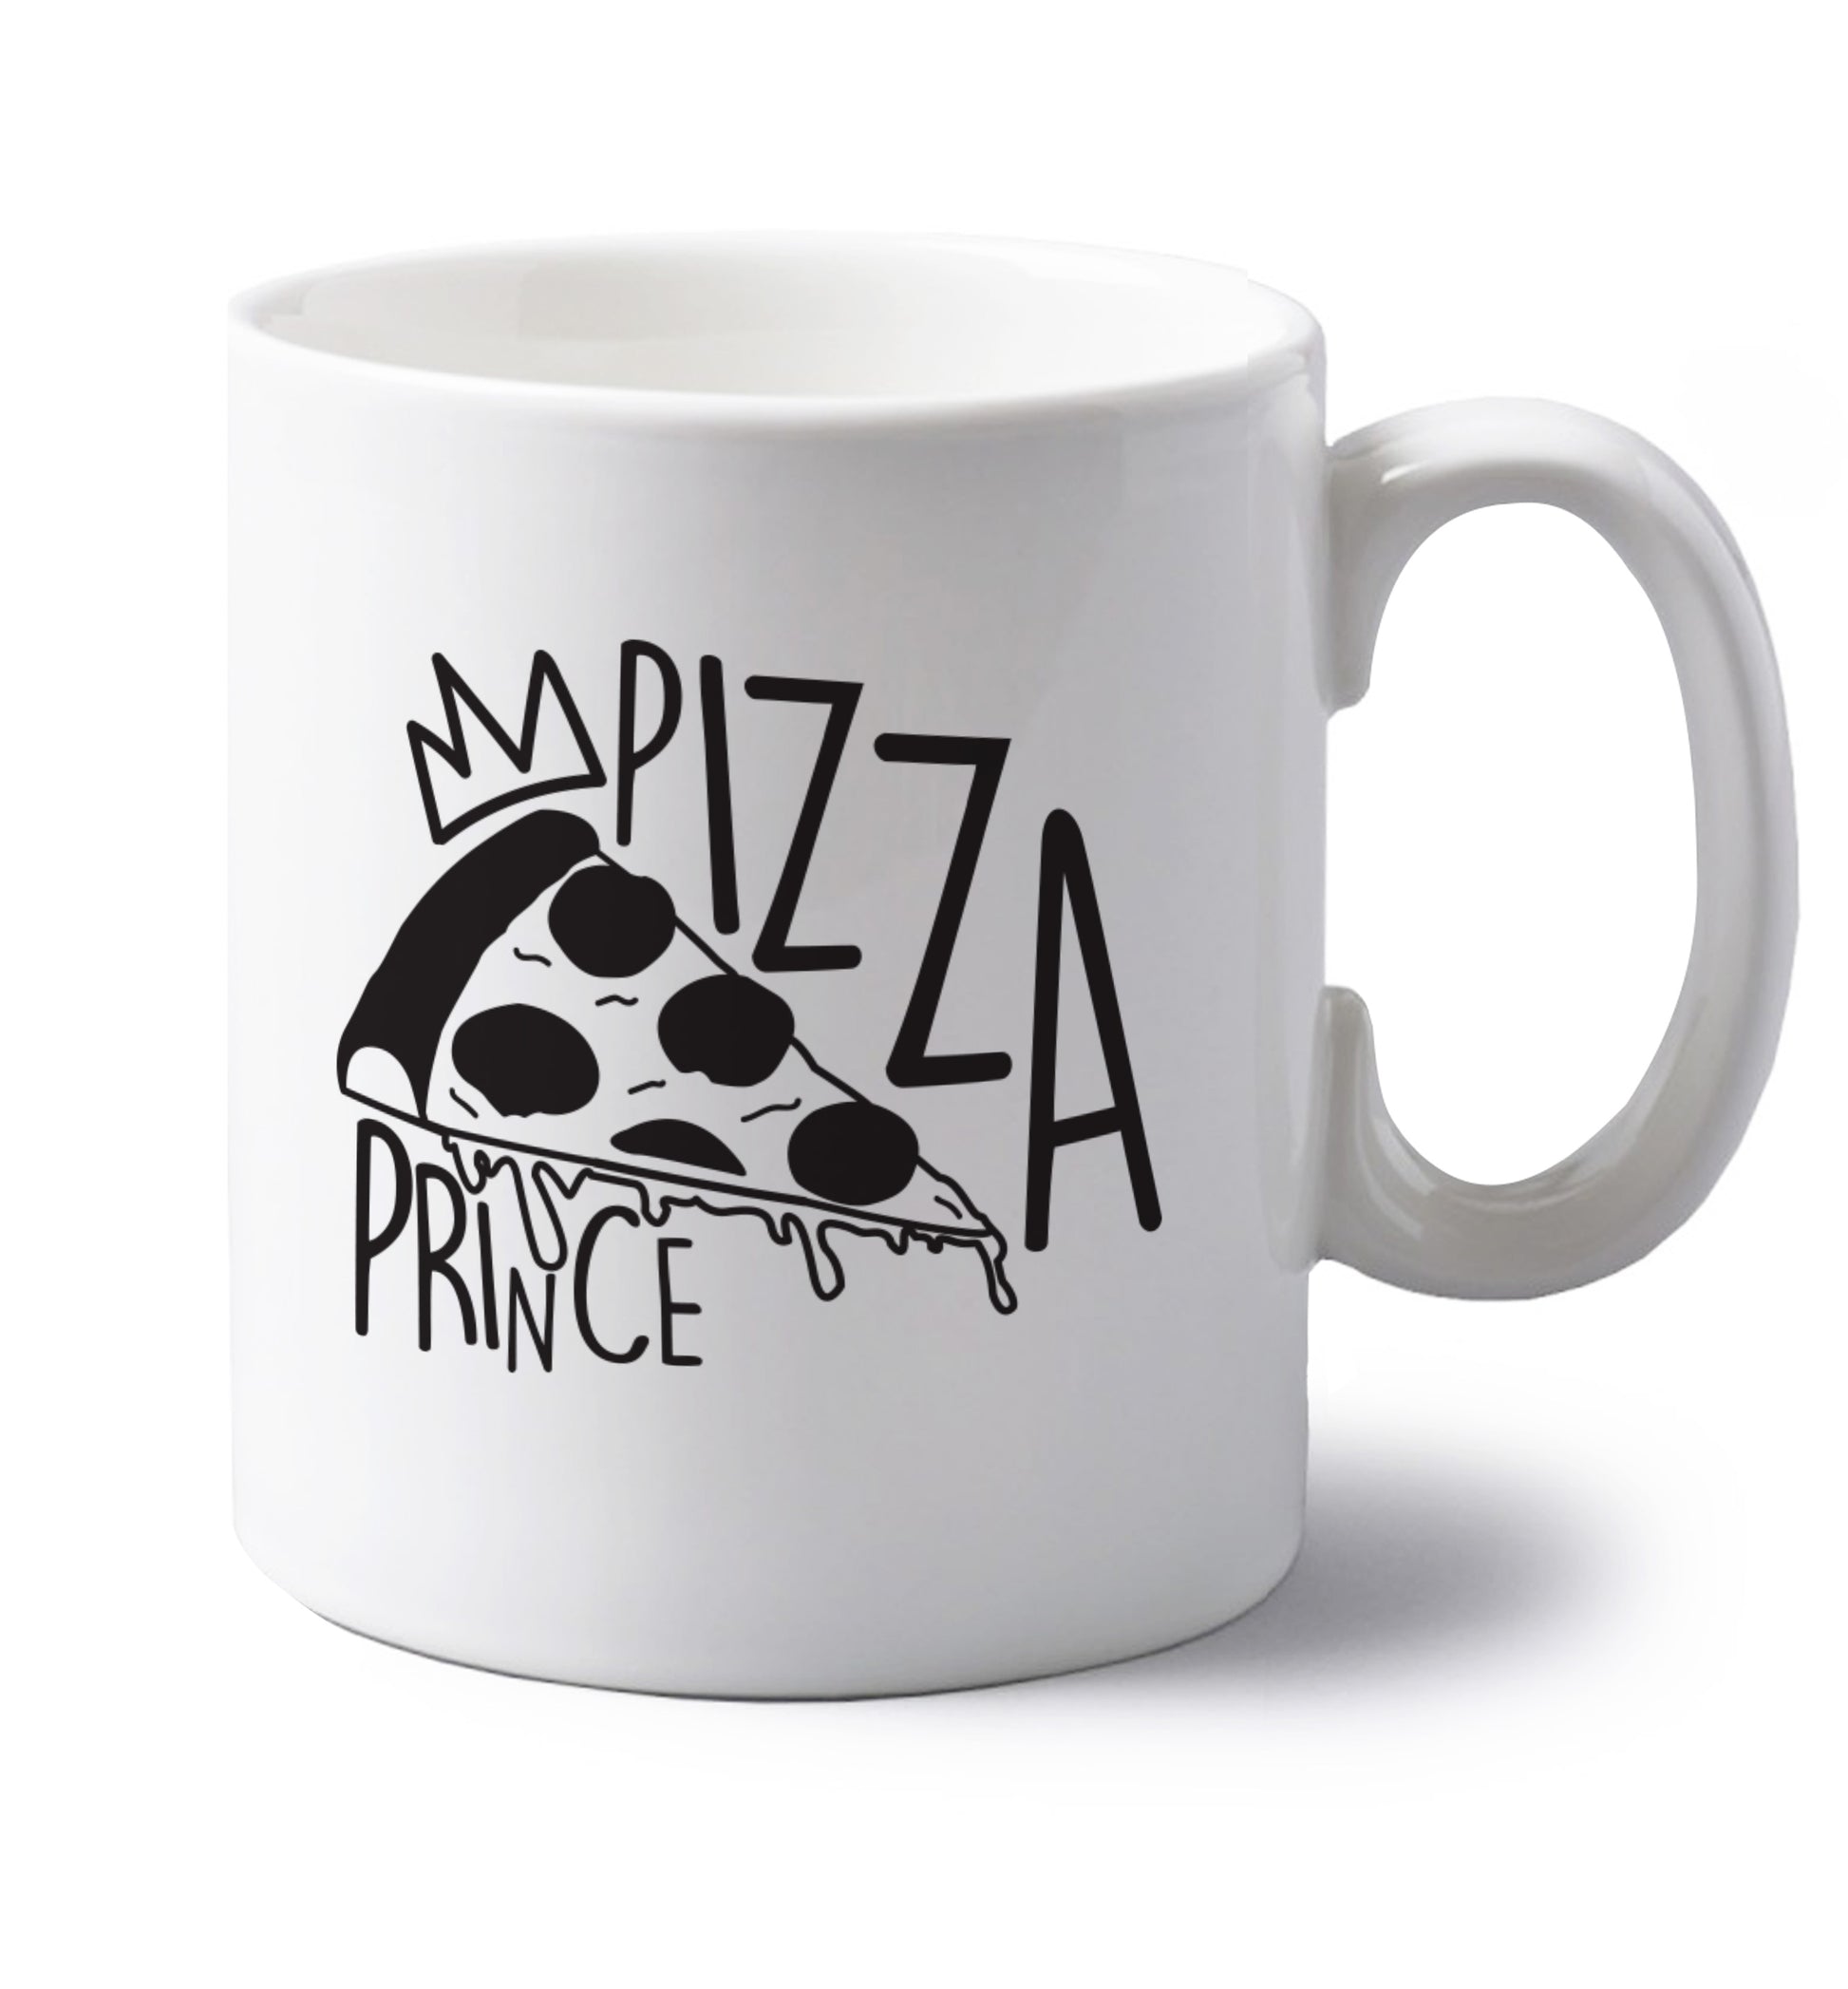 Pizza Prince left handed white ceramic mug 